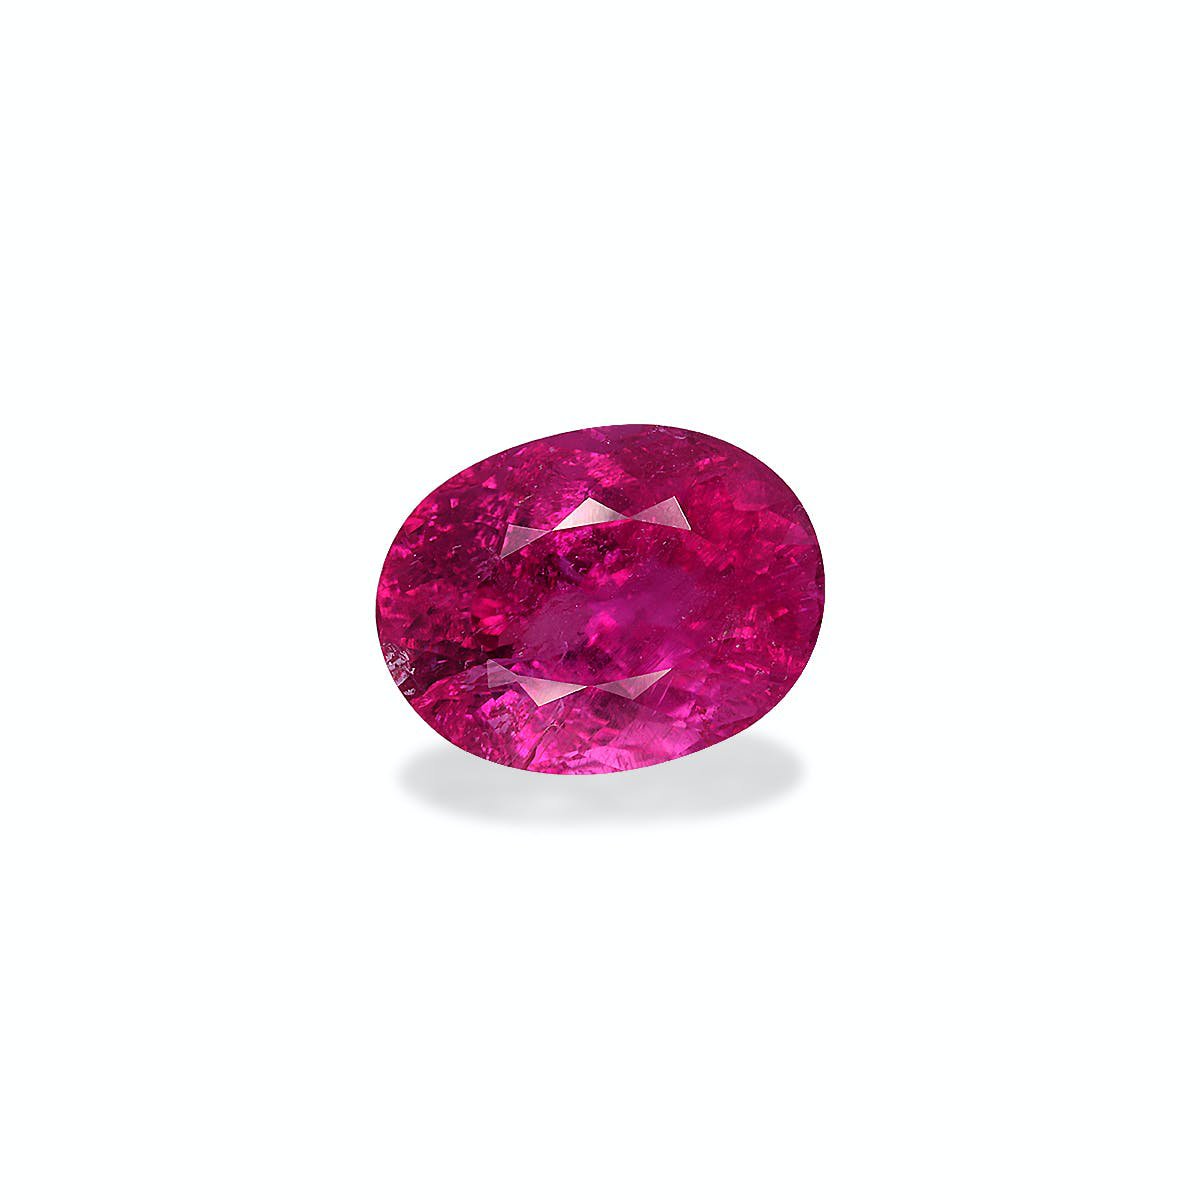 Picture of Vivid Pink Rubellite Tourmaline 4.39ct - 11x9mm (RL0869)